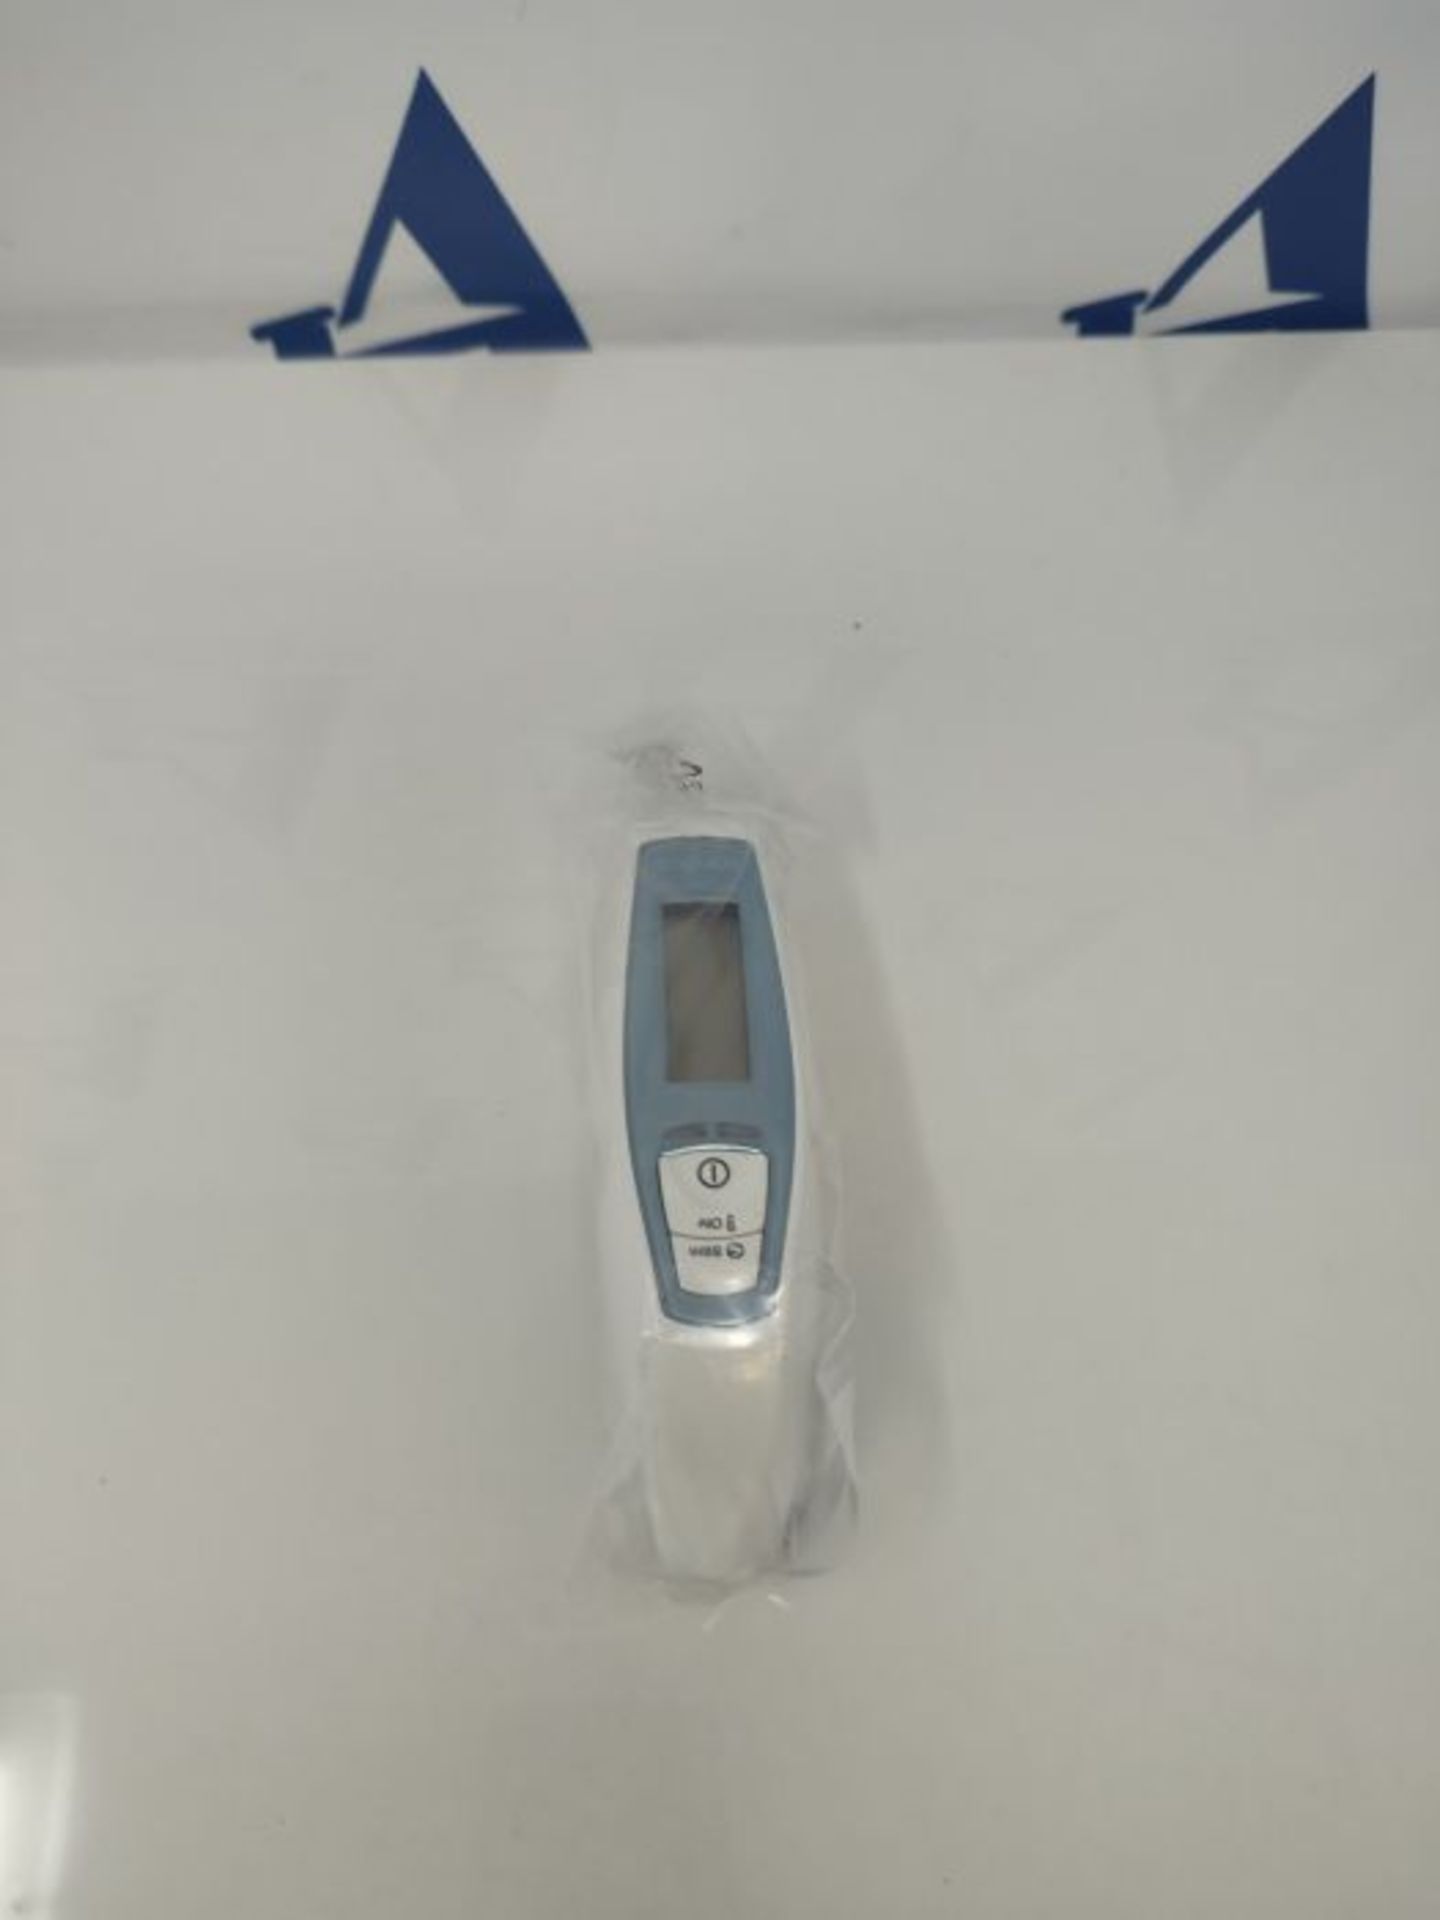 Sanitas SFT65 Multifunction Medical Thermometer - Image 3 of 3